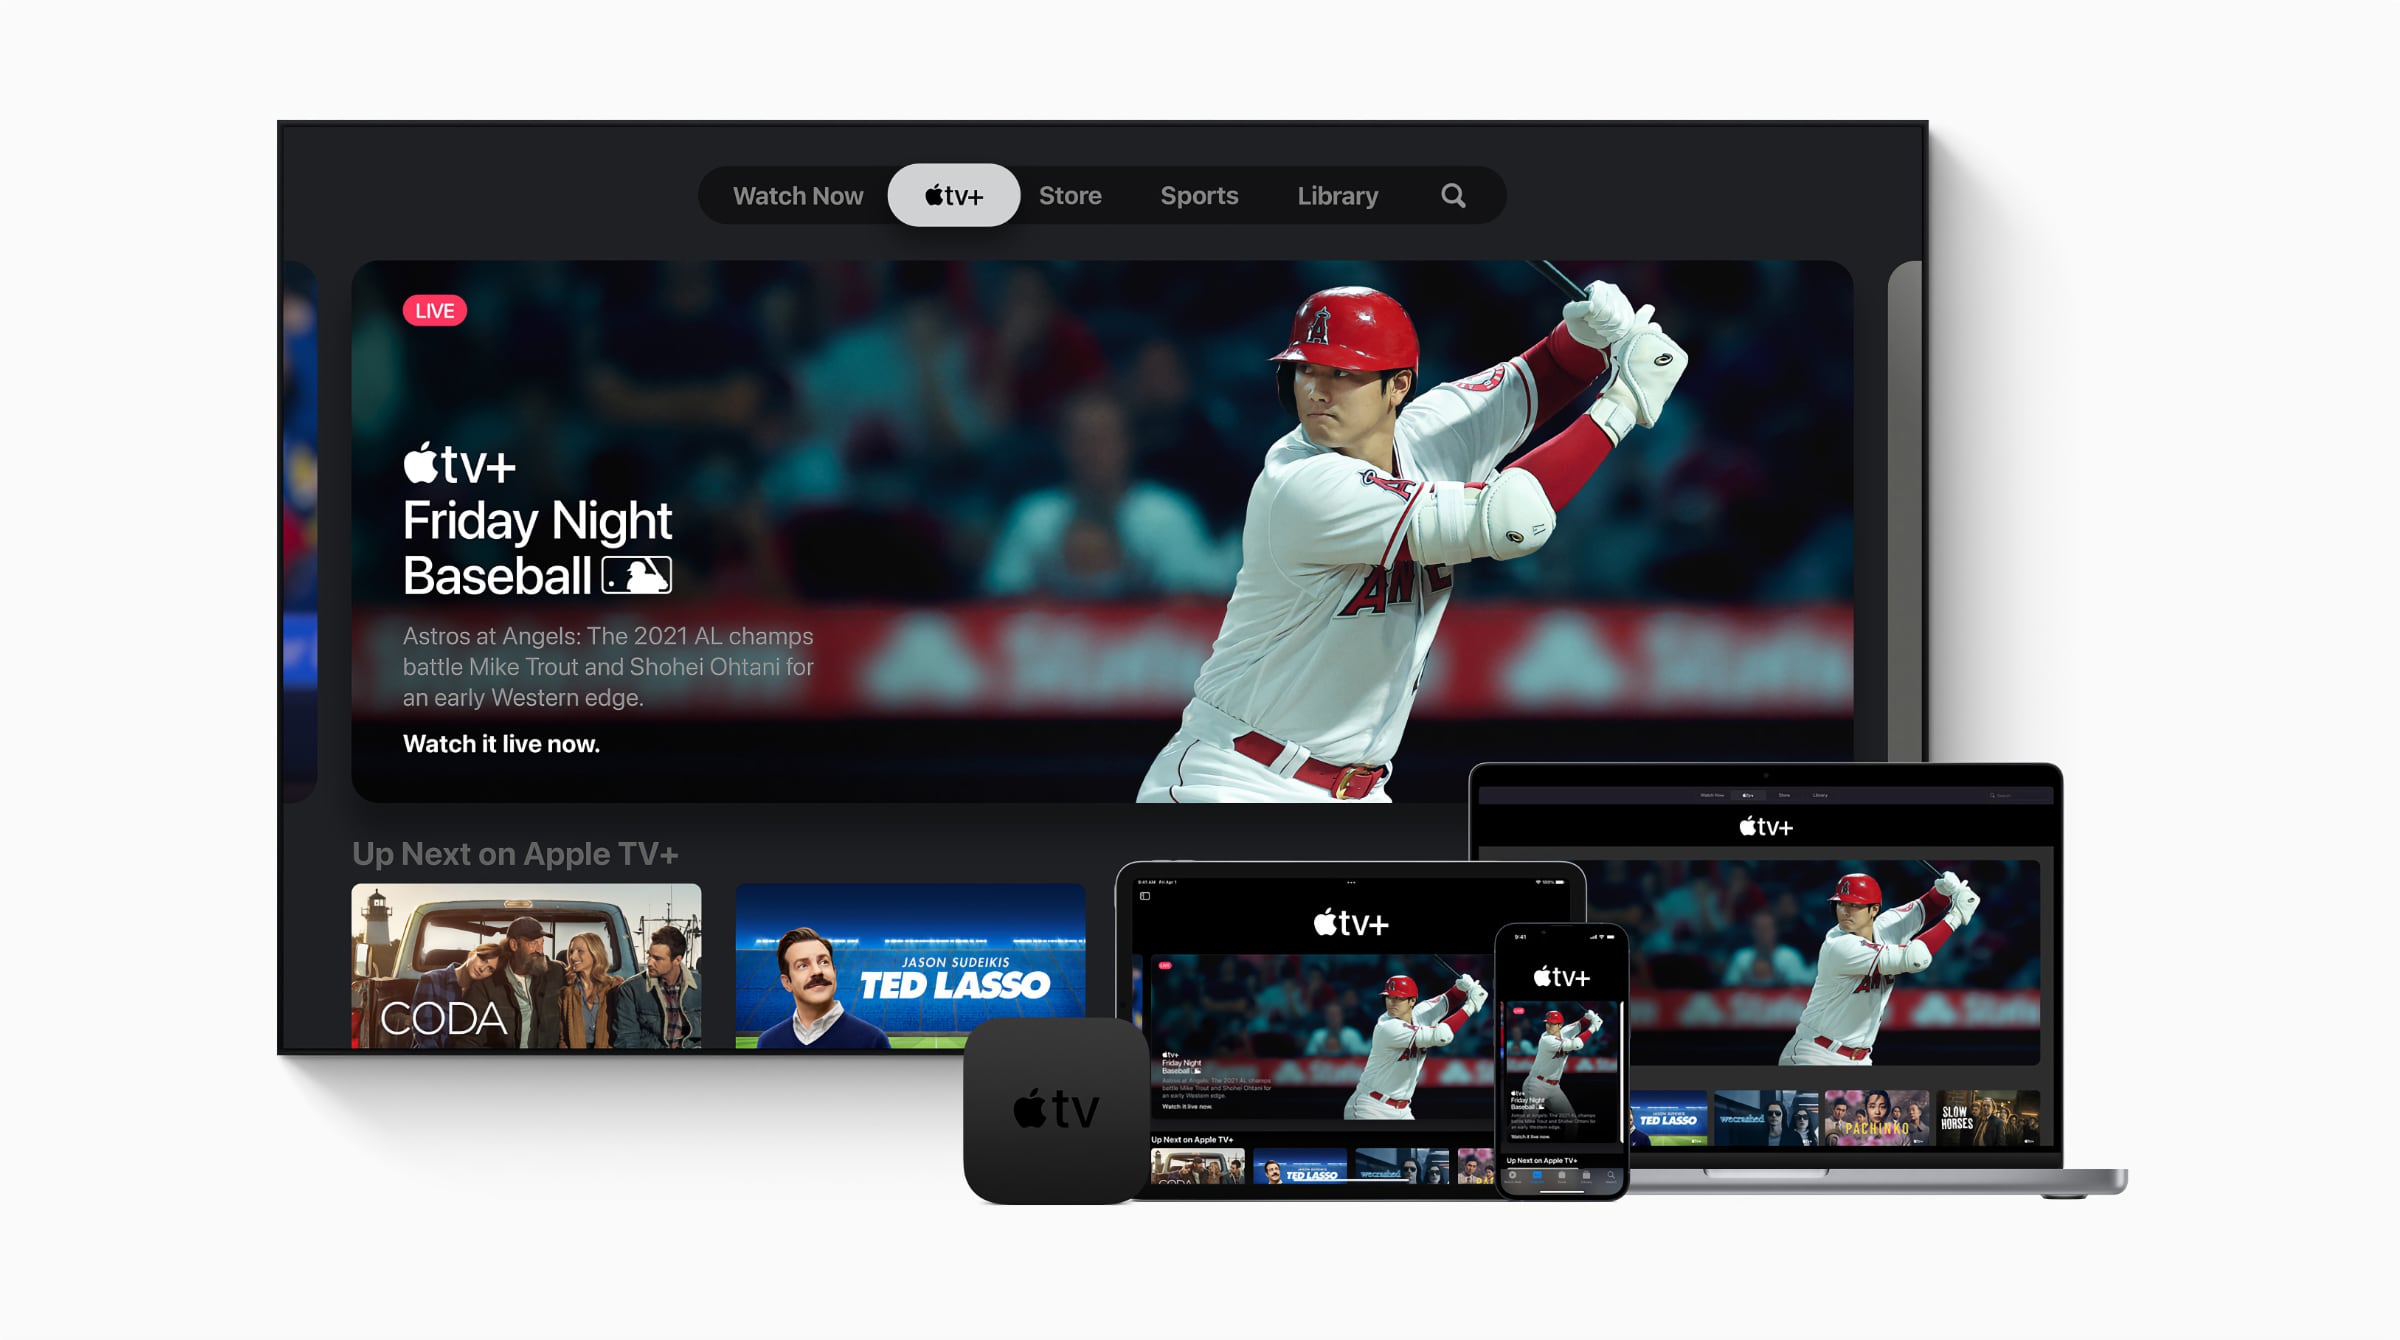 Friday Night Baseball (MLB) is free on Apple TV+ starting today